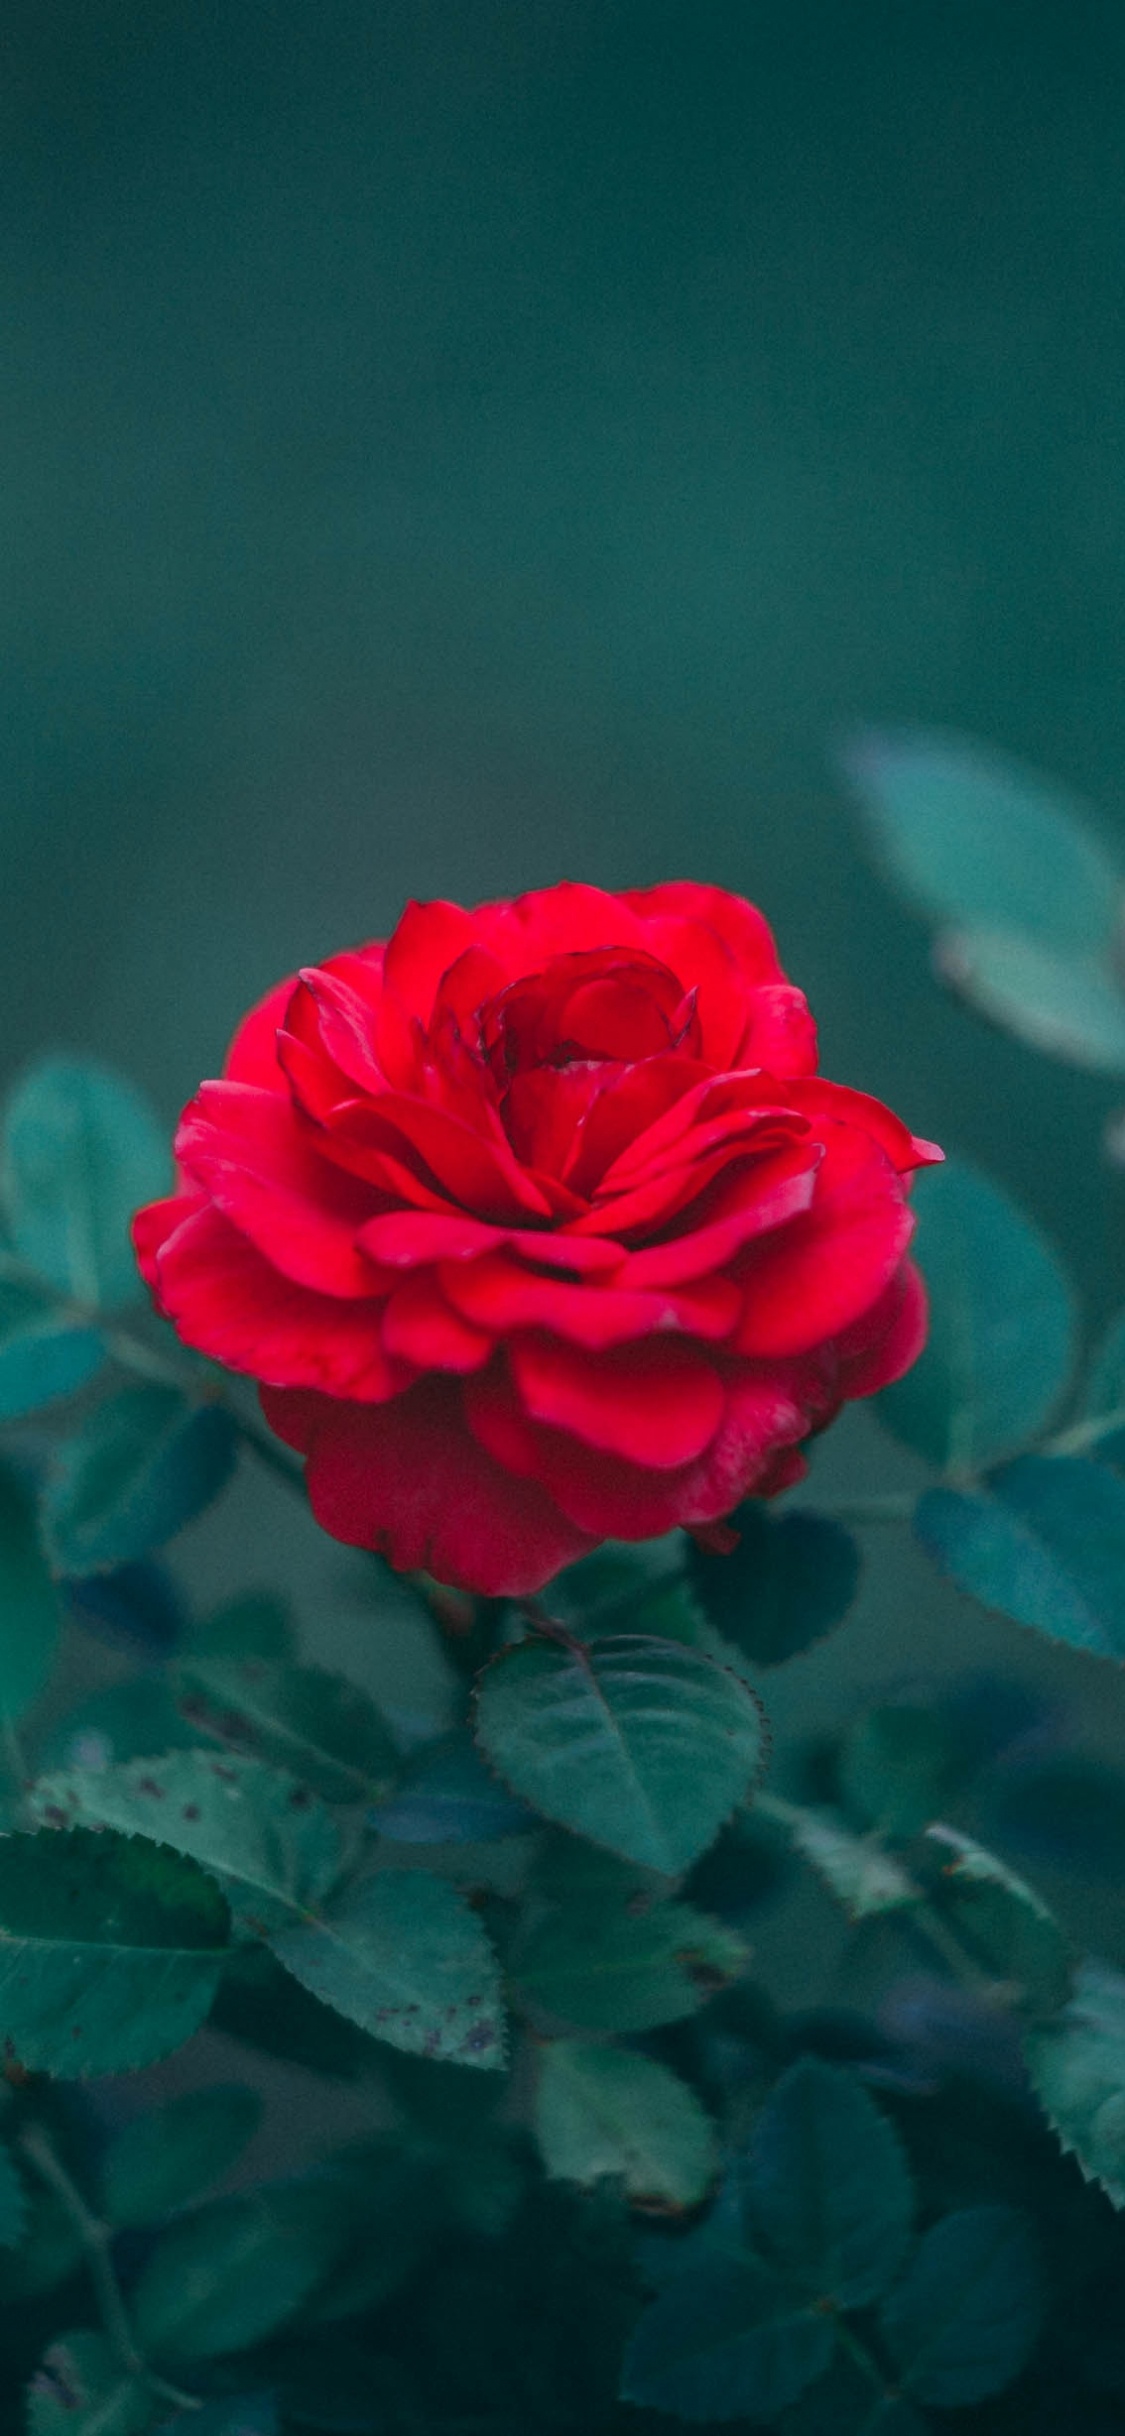 Rose Rouge en Fleurs Pendant la Journée. Wallpaper in 1125x2436 Resolution